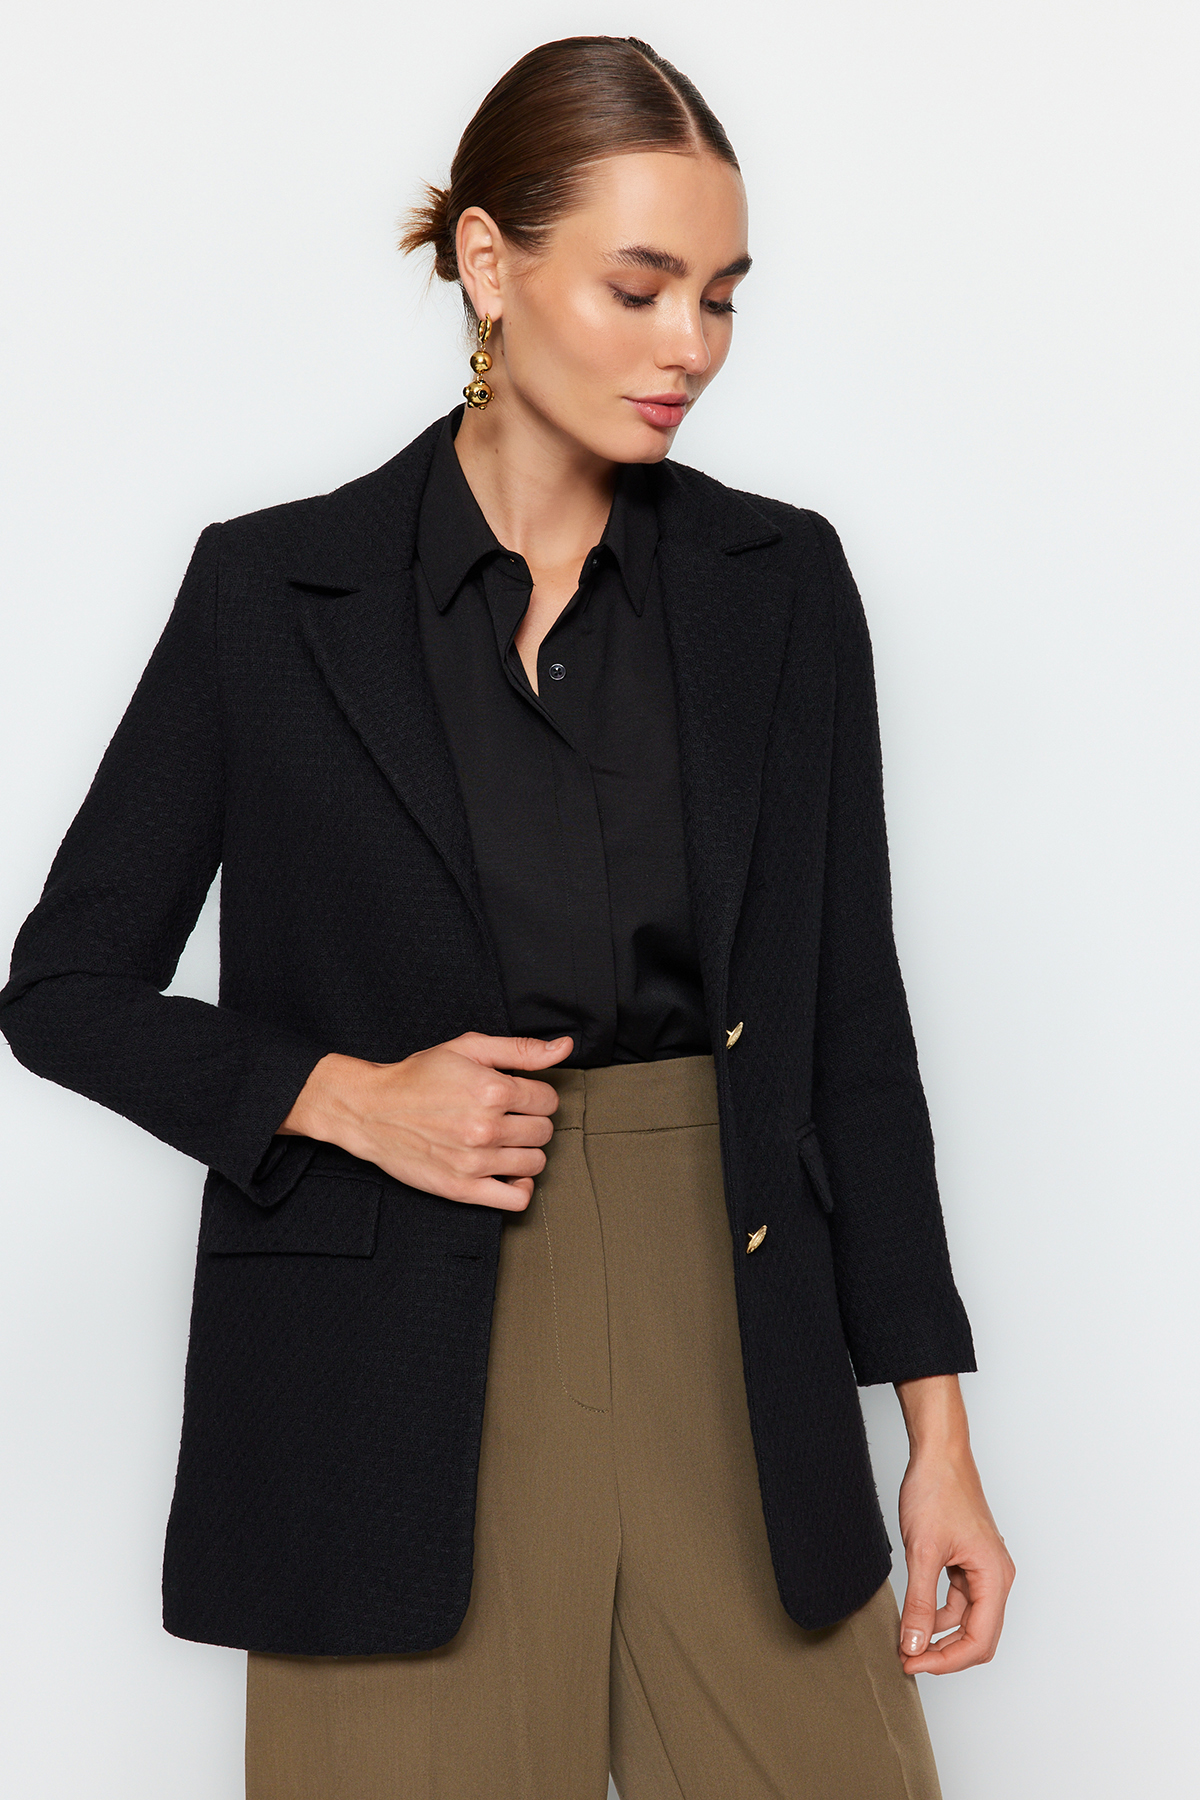 Trendyol Black Tweed Regular Lined Woven Blazer Jacket with Metal Buttons